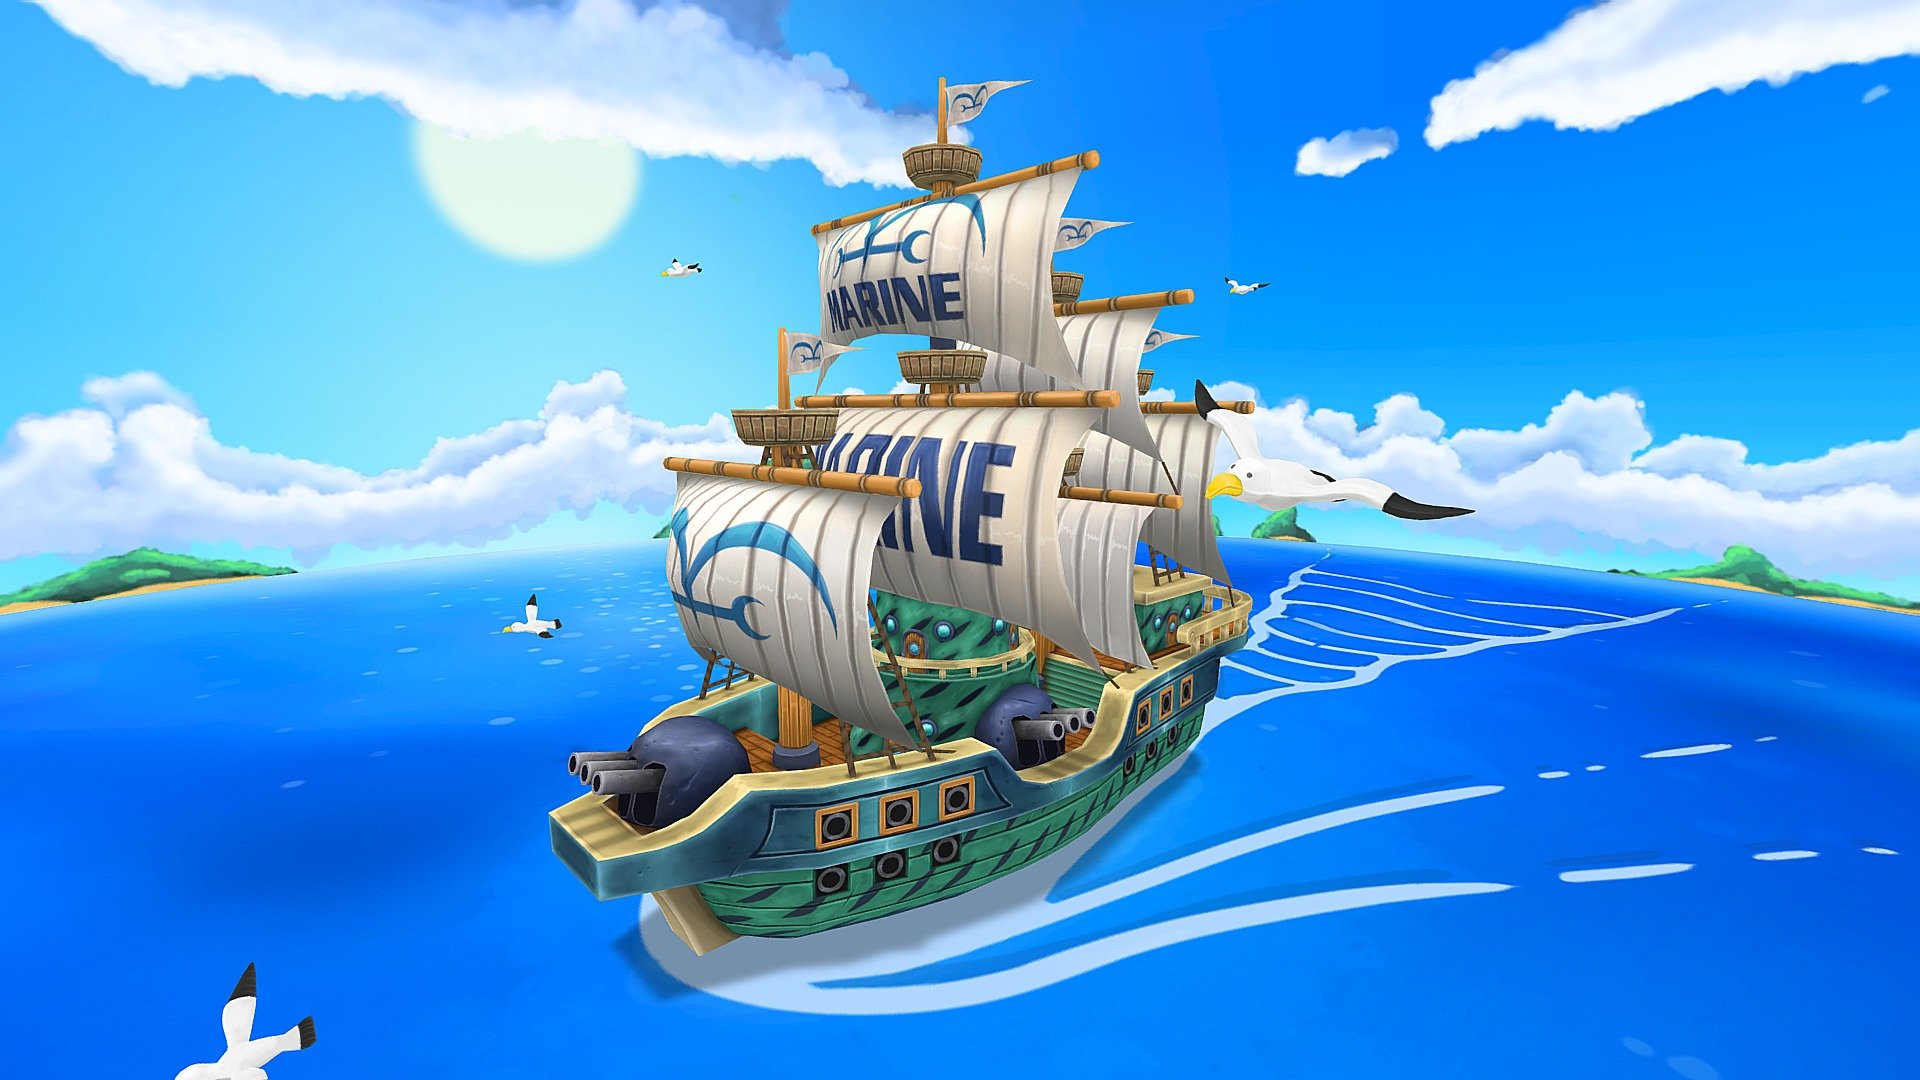 A small scene of my favorite anime.
https://www.artstation.com/artwork/NxRZ0z
Only Albedo unlit scene.
Textures: Substance Painter and Photoshop
Modelling: 3dsMax
Retopo: TopoGun
Render: Marmoset Toolbag - One Piece Marine ship - Buy Royalty Free 3D model by Jhonny.art 3d model